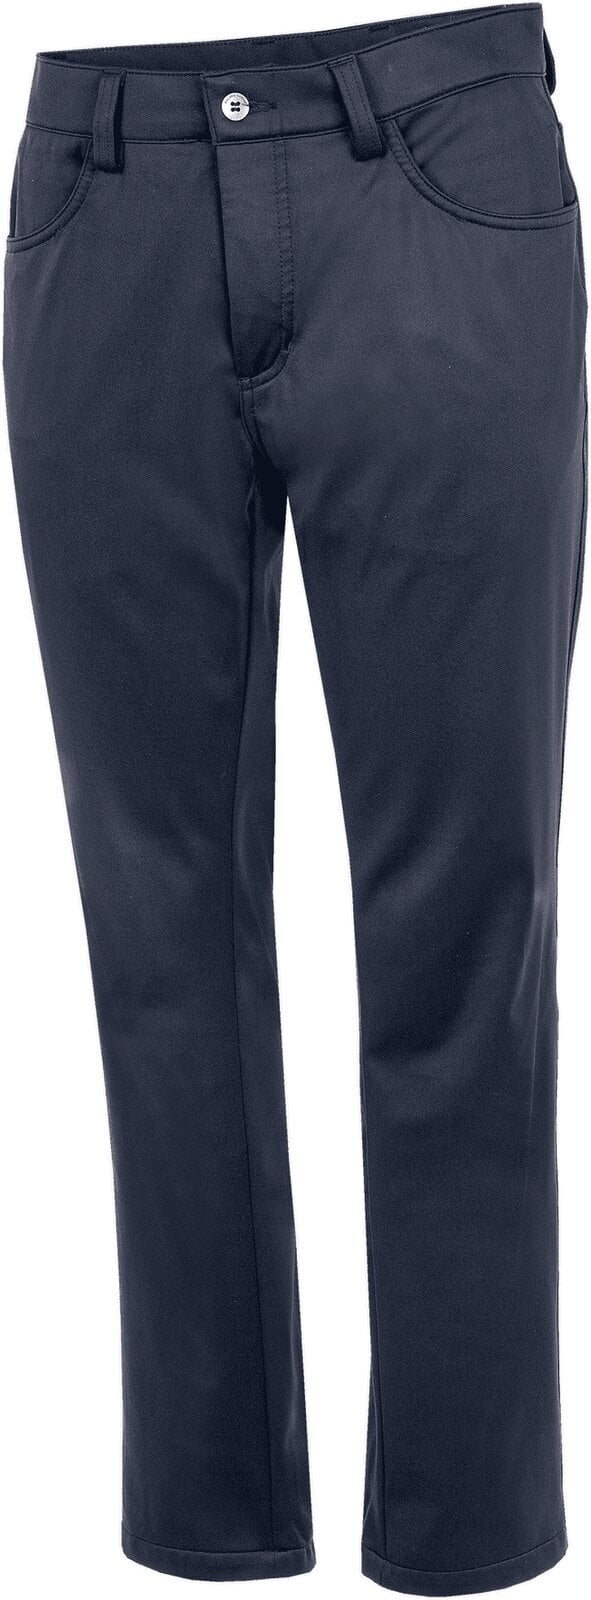 Pantalons Galvin Green Lane MensWindproof And Water Repellent Pants Navy 32/32